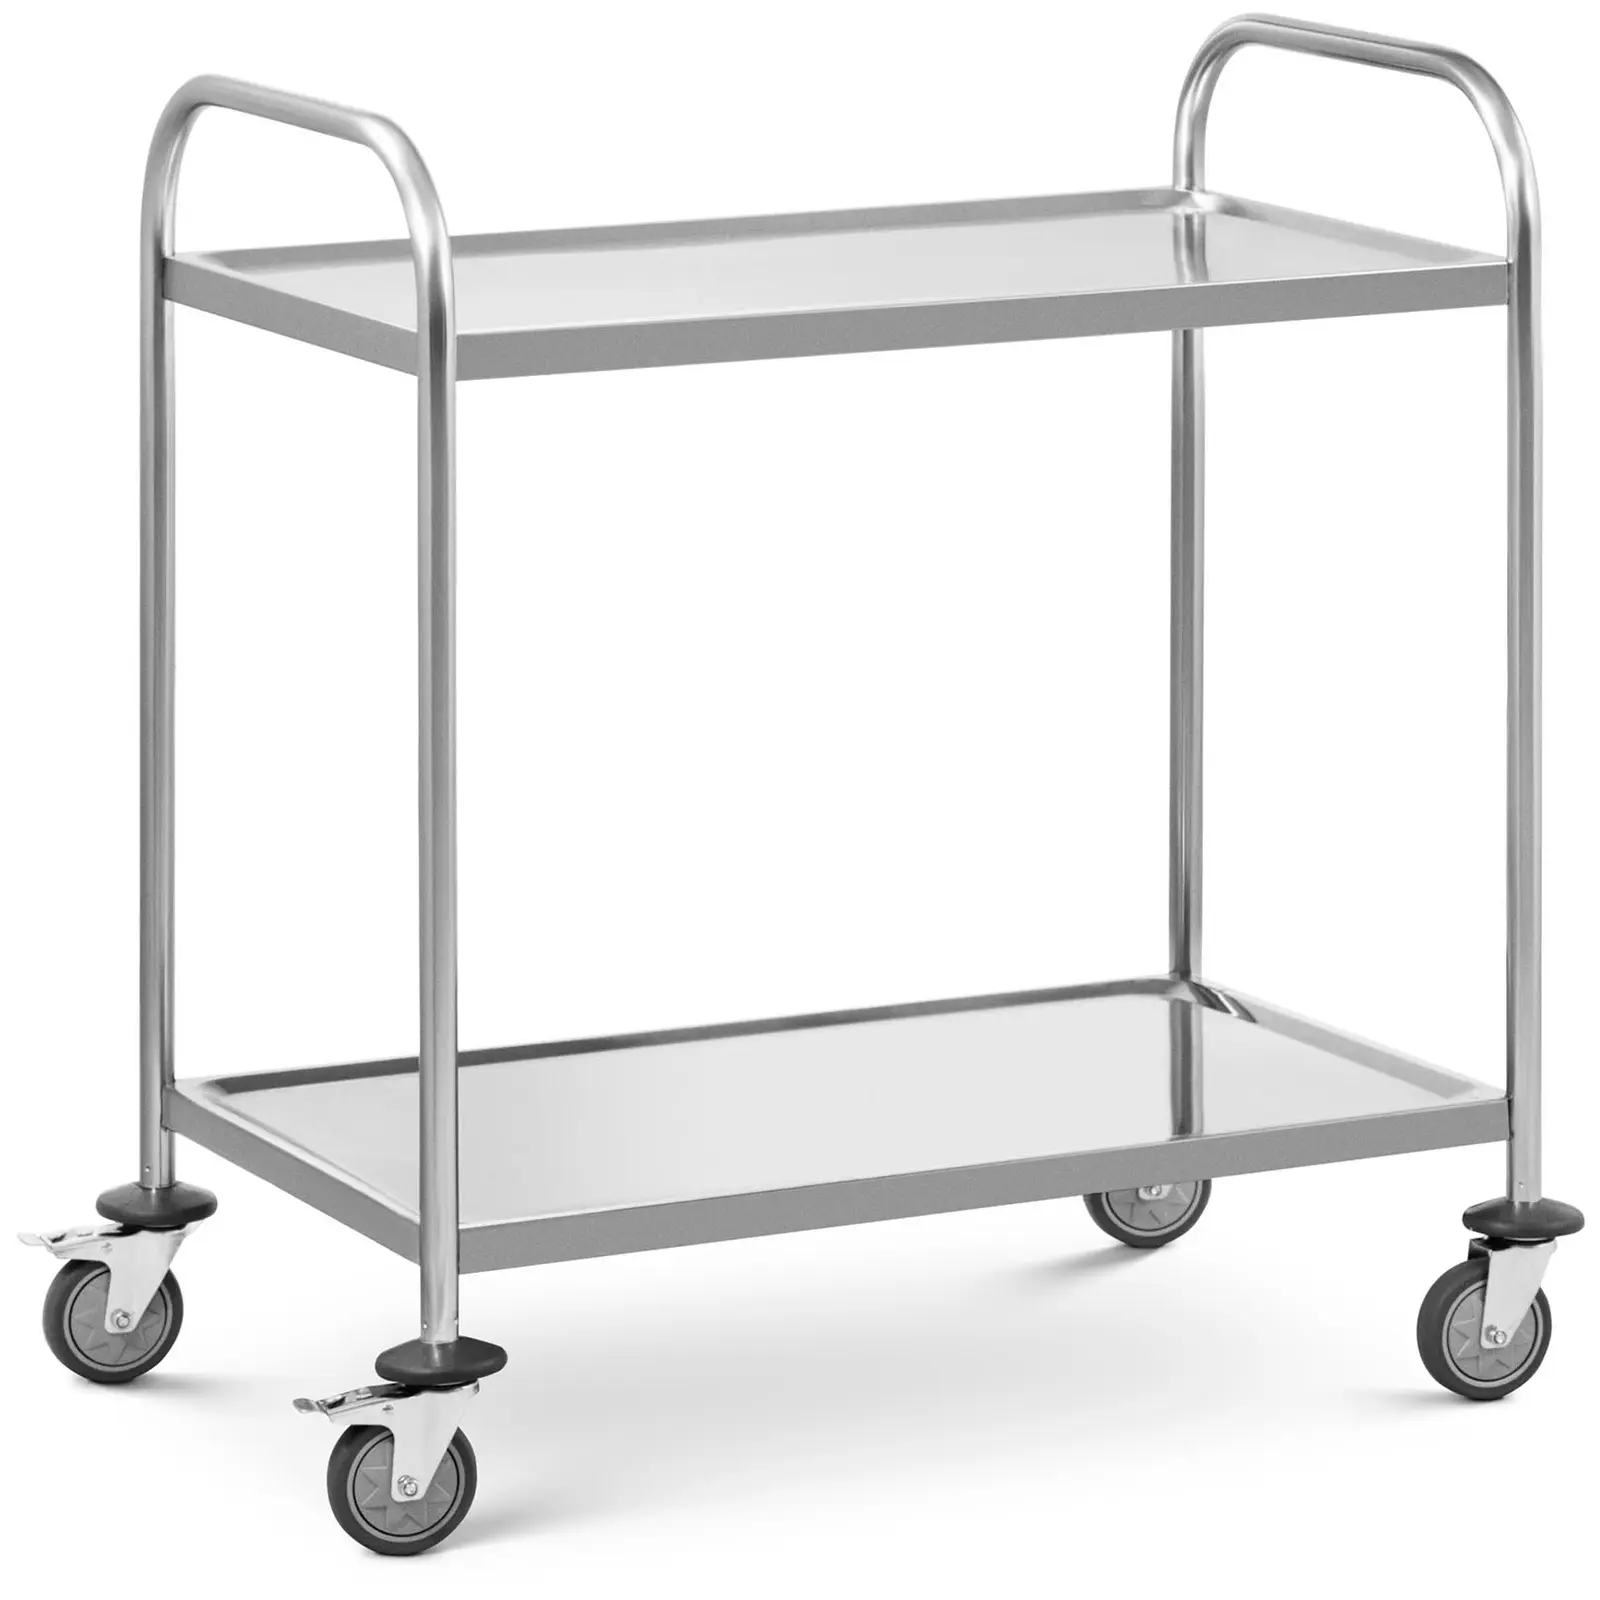 Serving trolley - 2 shelves - up to 40 kg - handles - shelves: 82.5 x 50.5 cm - Royal Catering